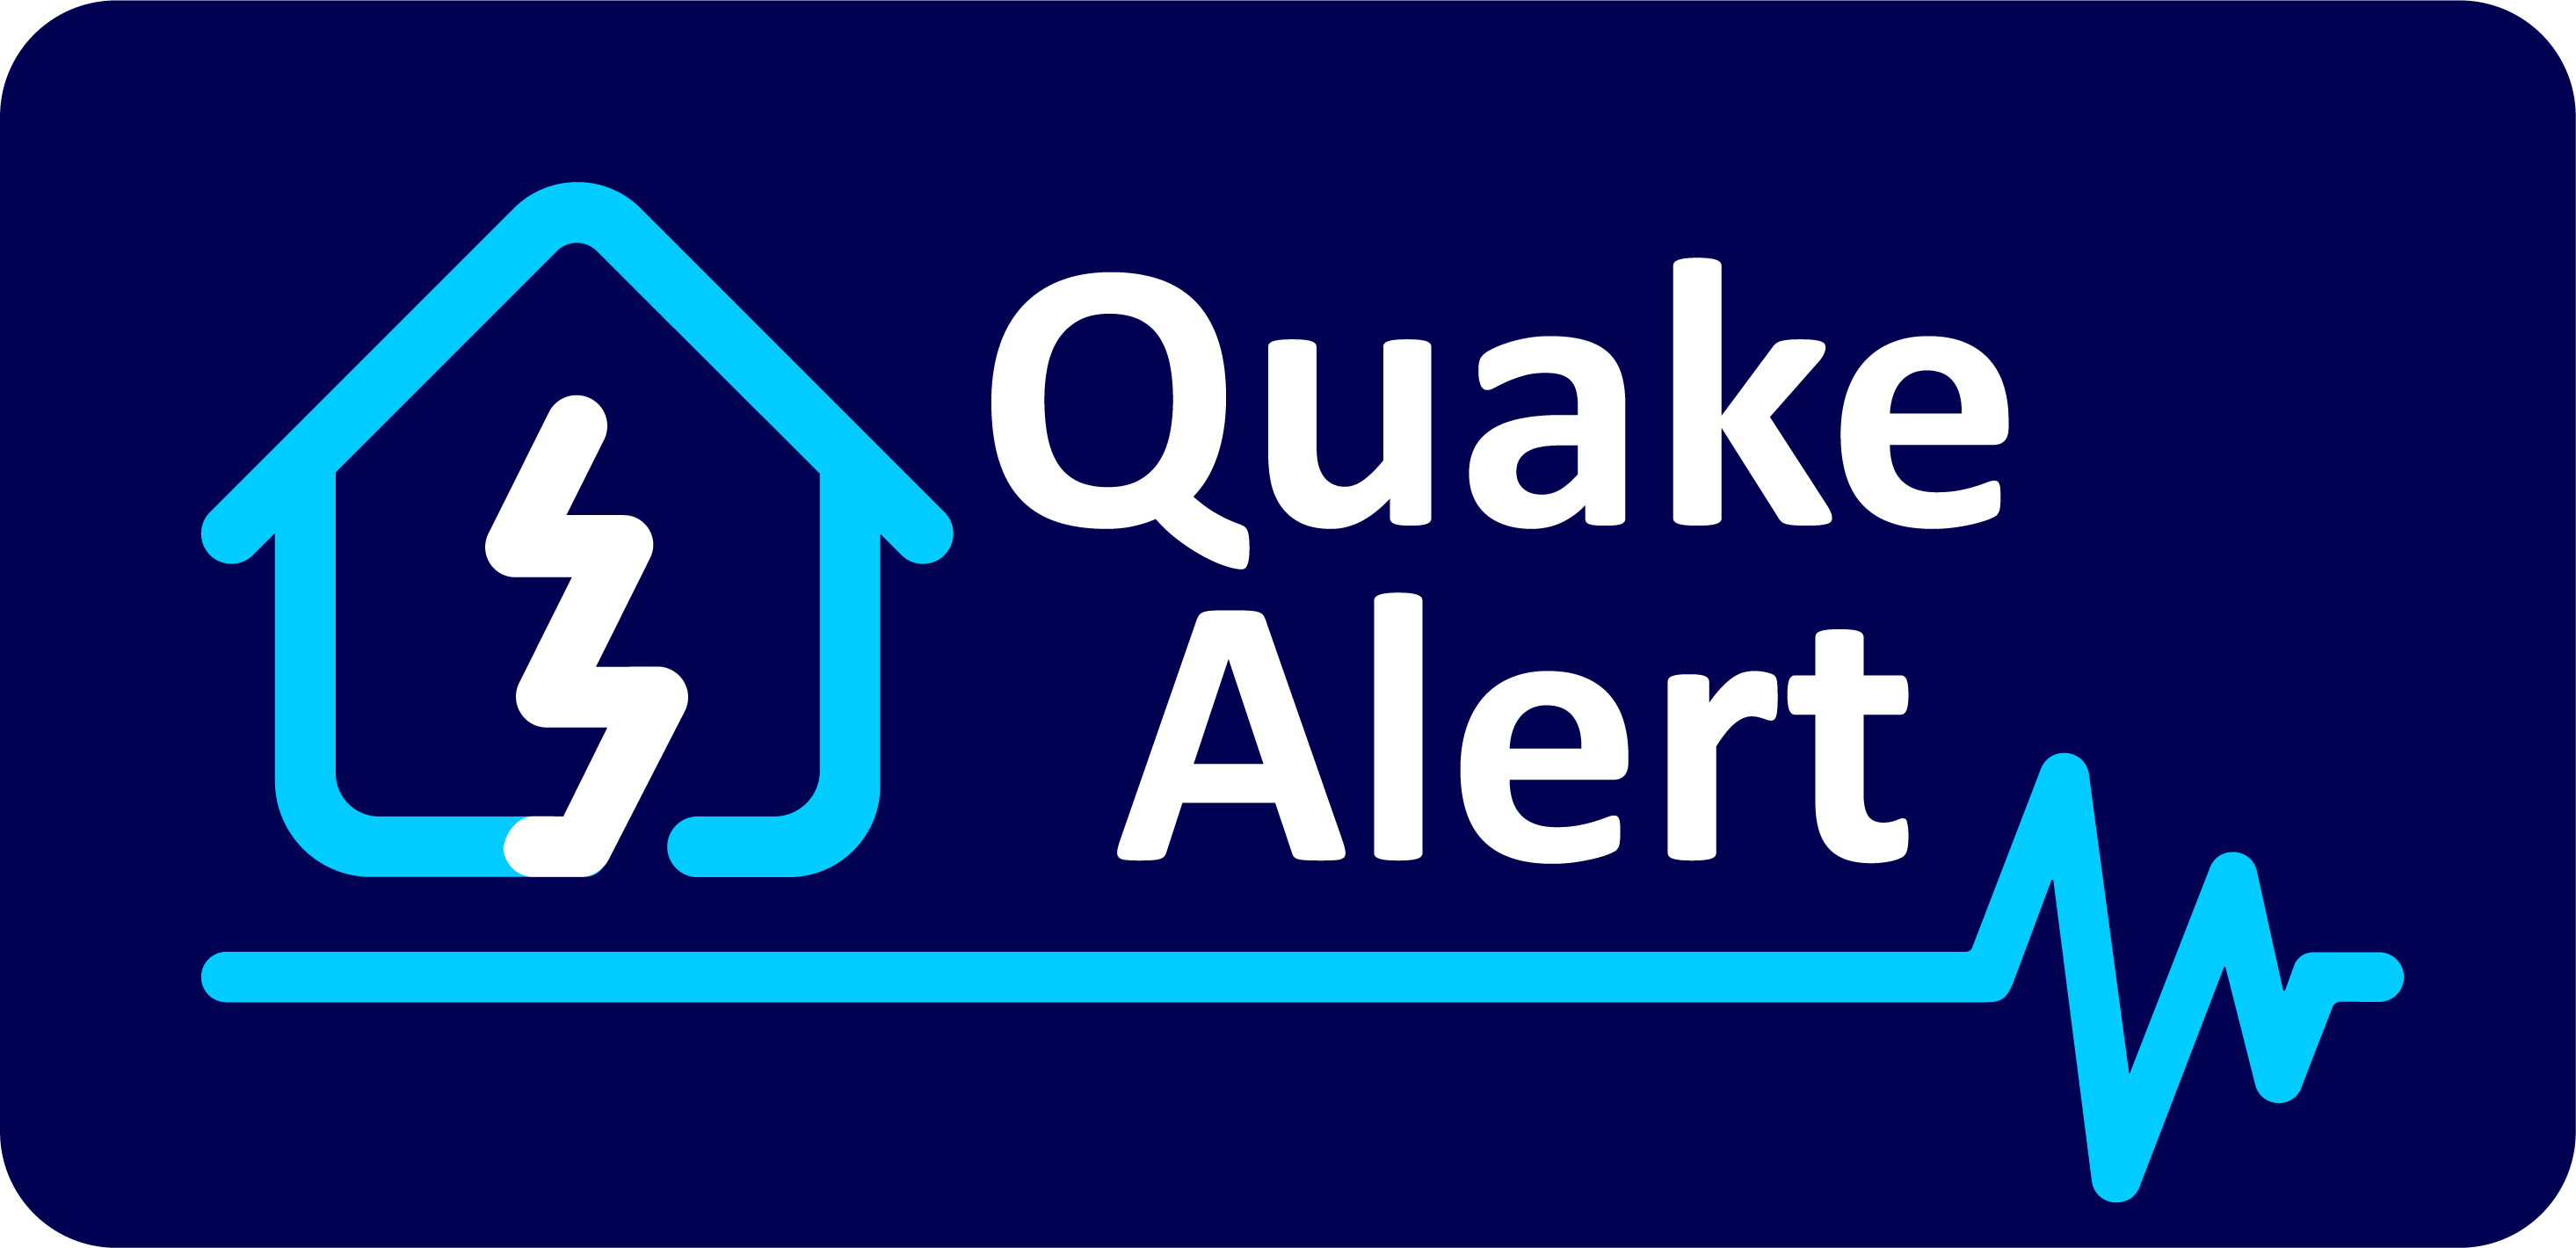 Quake Alert